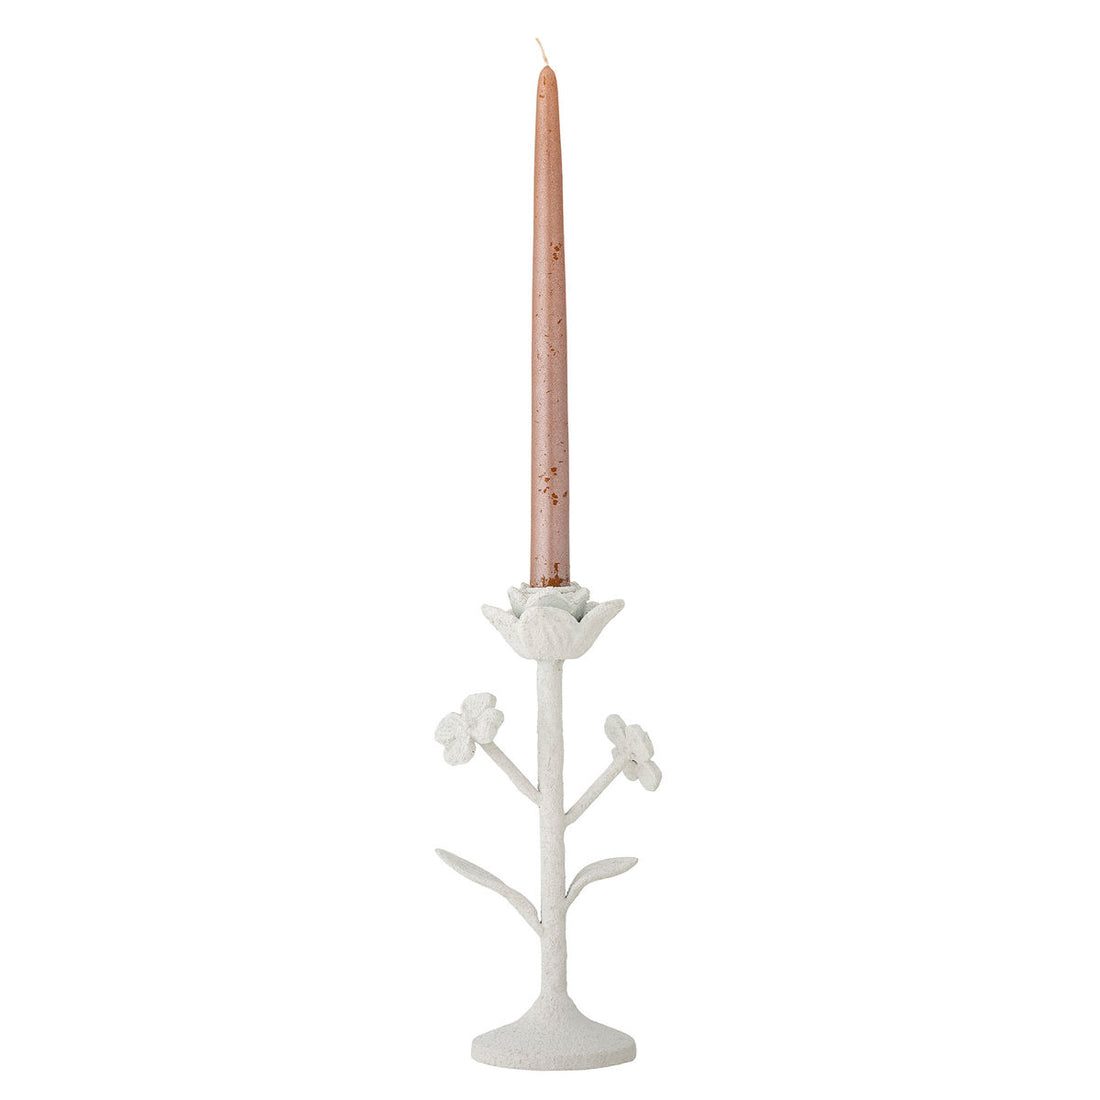 Creative Collection Ranin Candlestick, White, Iron